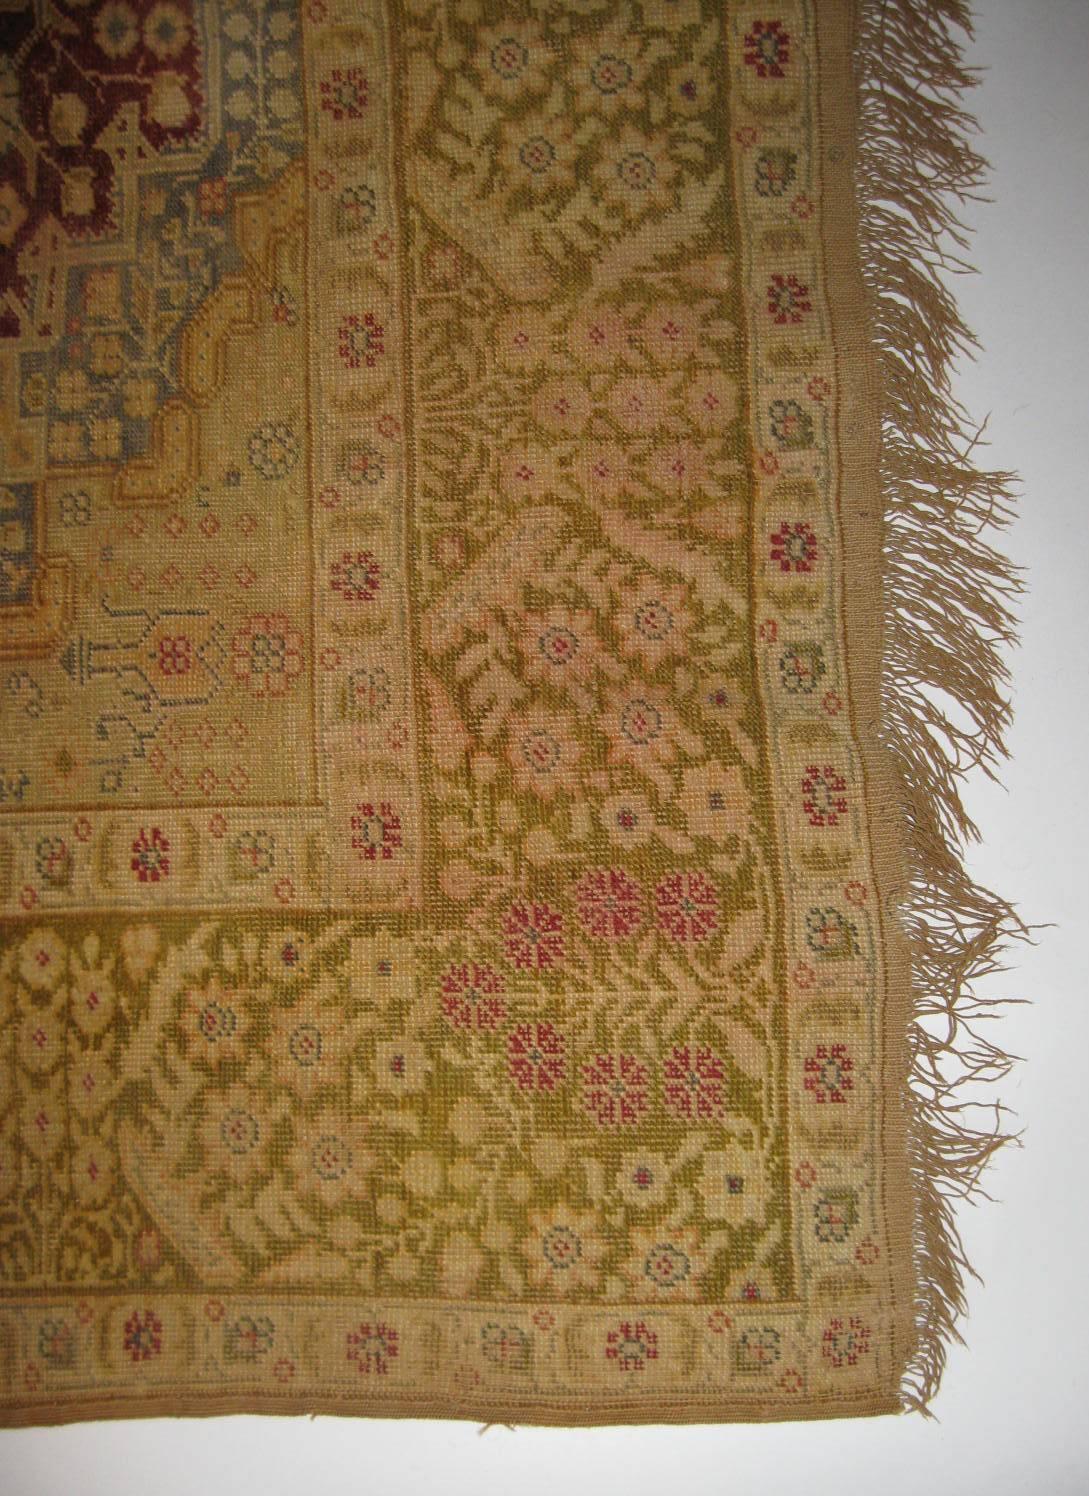 Woven 19th century Silk Sivas Rug